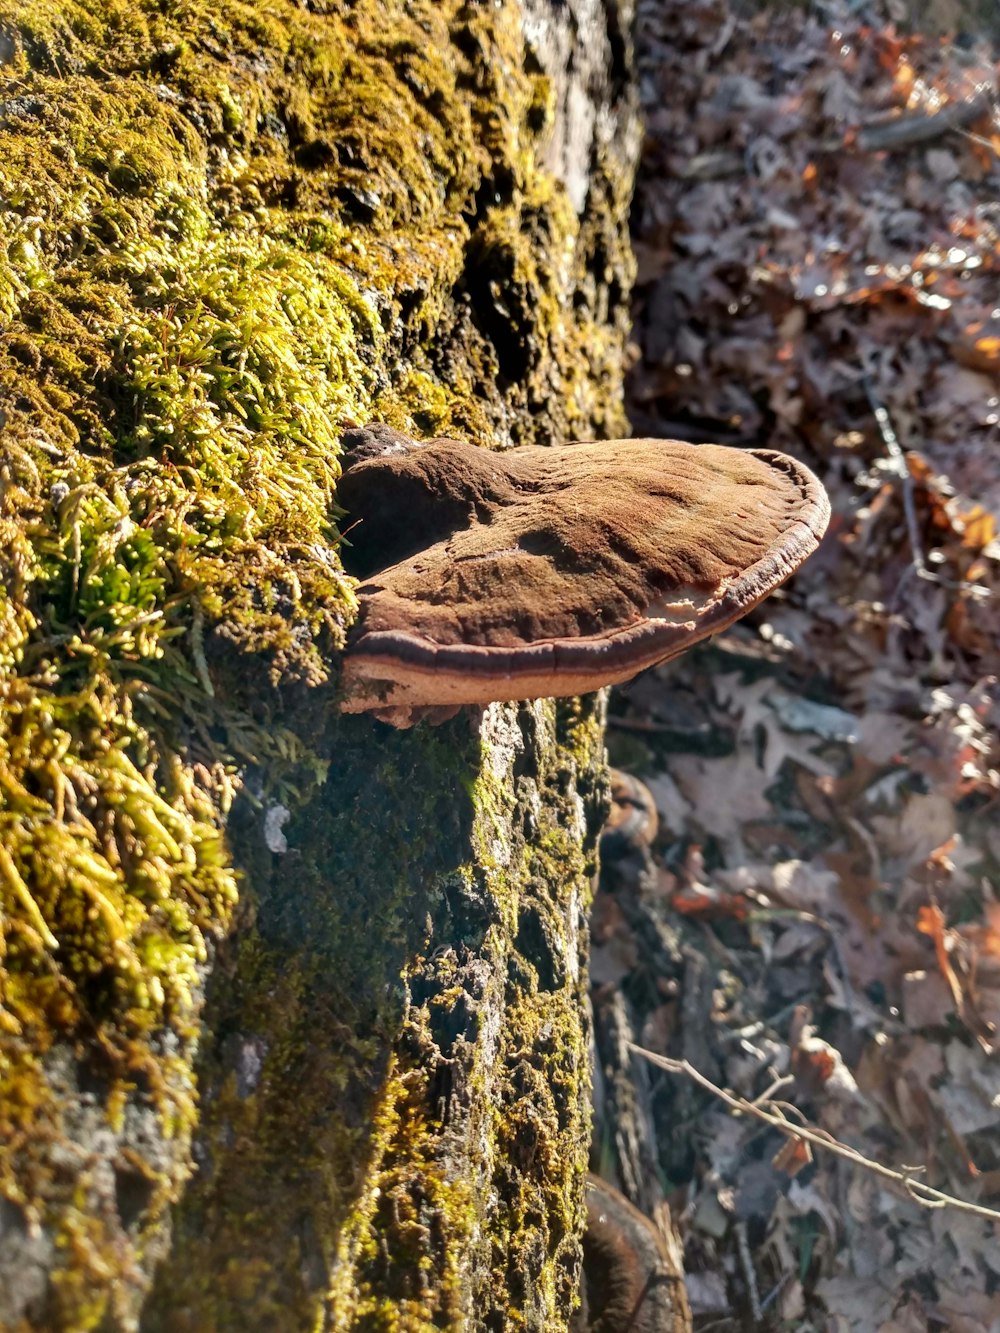 a mushroom is growing on a mossy tree